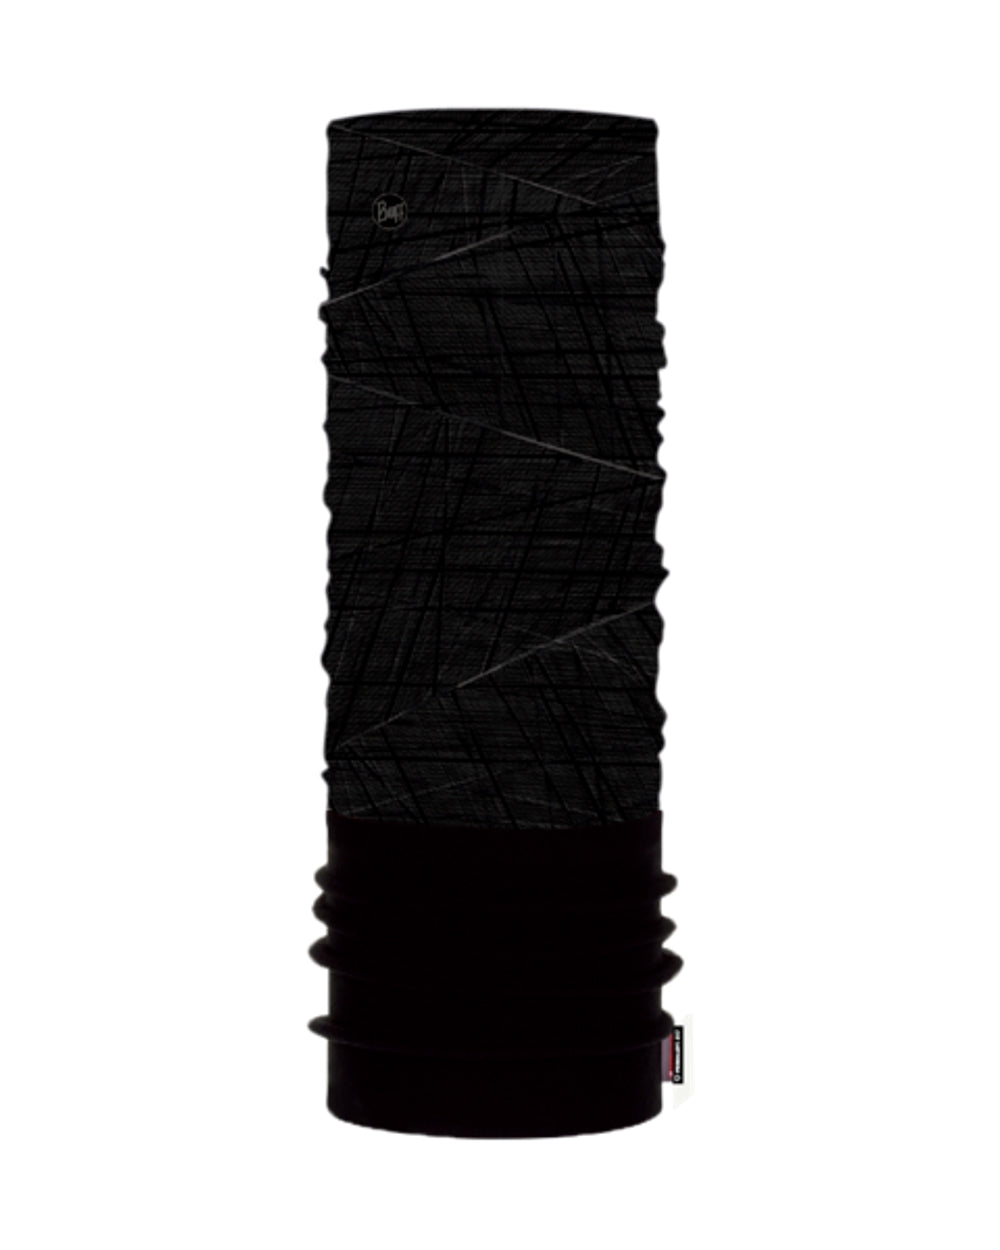 Buff Polar Multifunctional Neckwear in Embers Black 